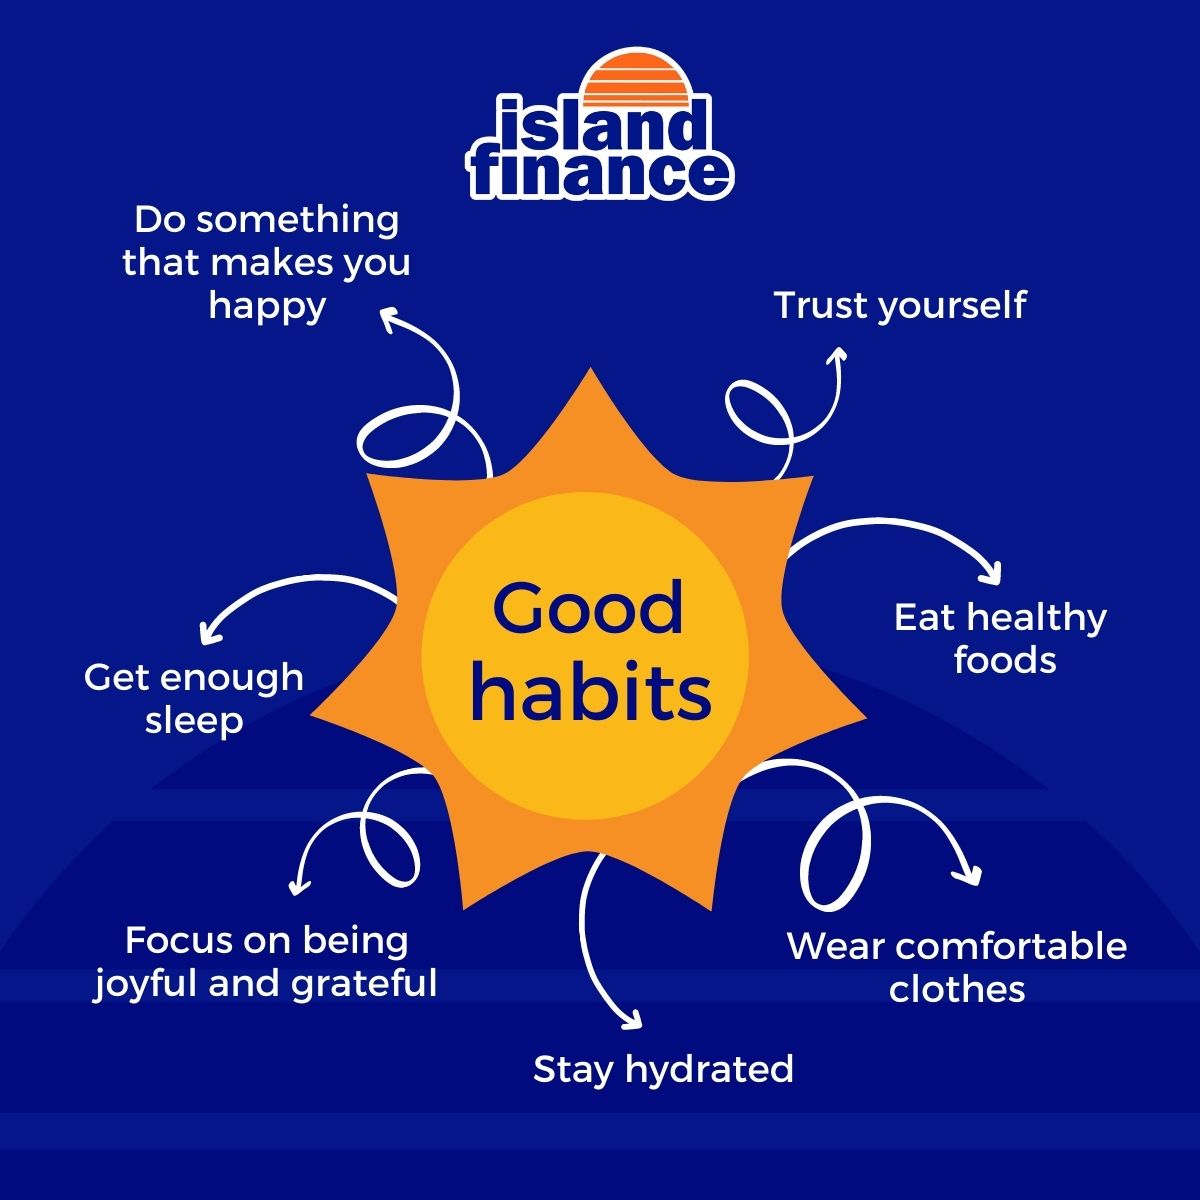 7 simple habits to have in life. #buildgoodhabits #goodhabits 
#habitsforhappiness #IslandFinance